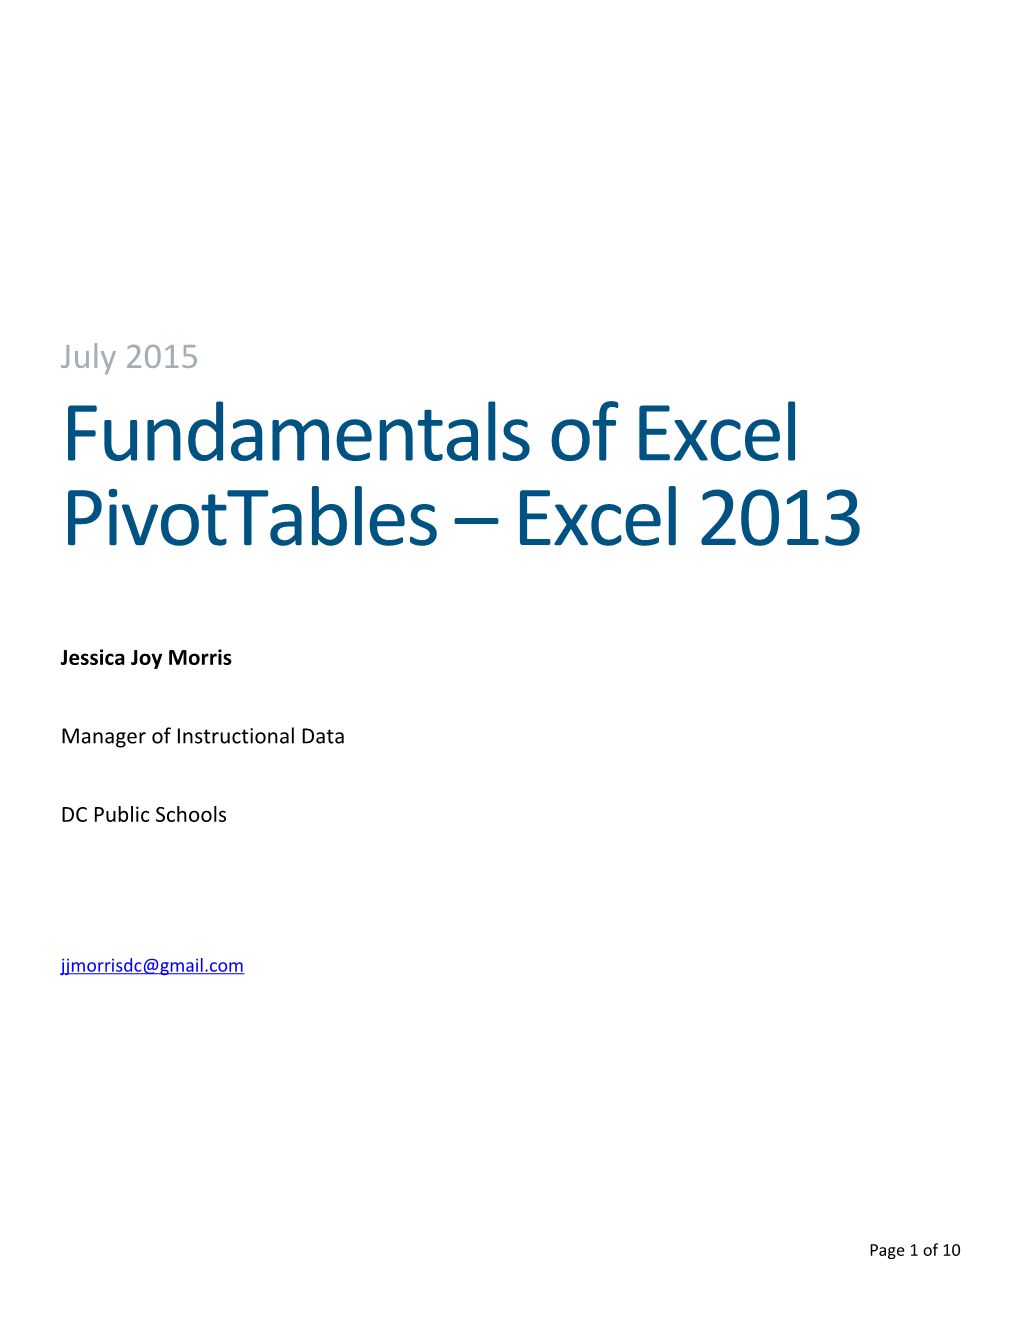 Fundamentals of Excel Pivottables Excel 2013